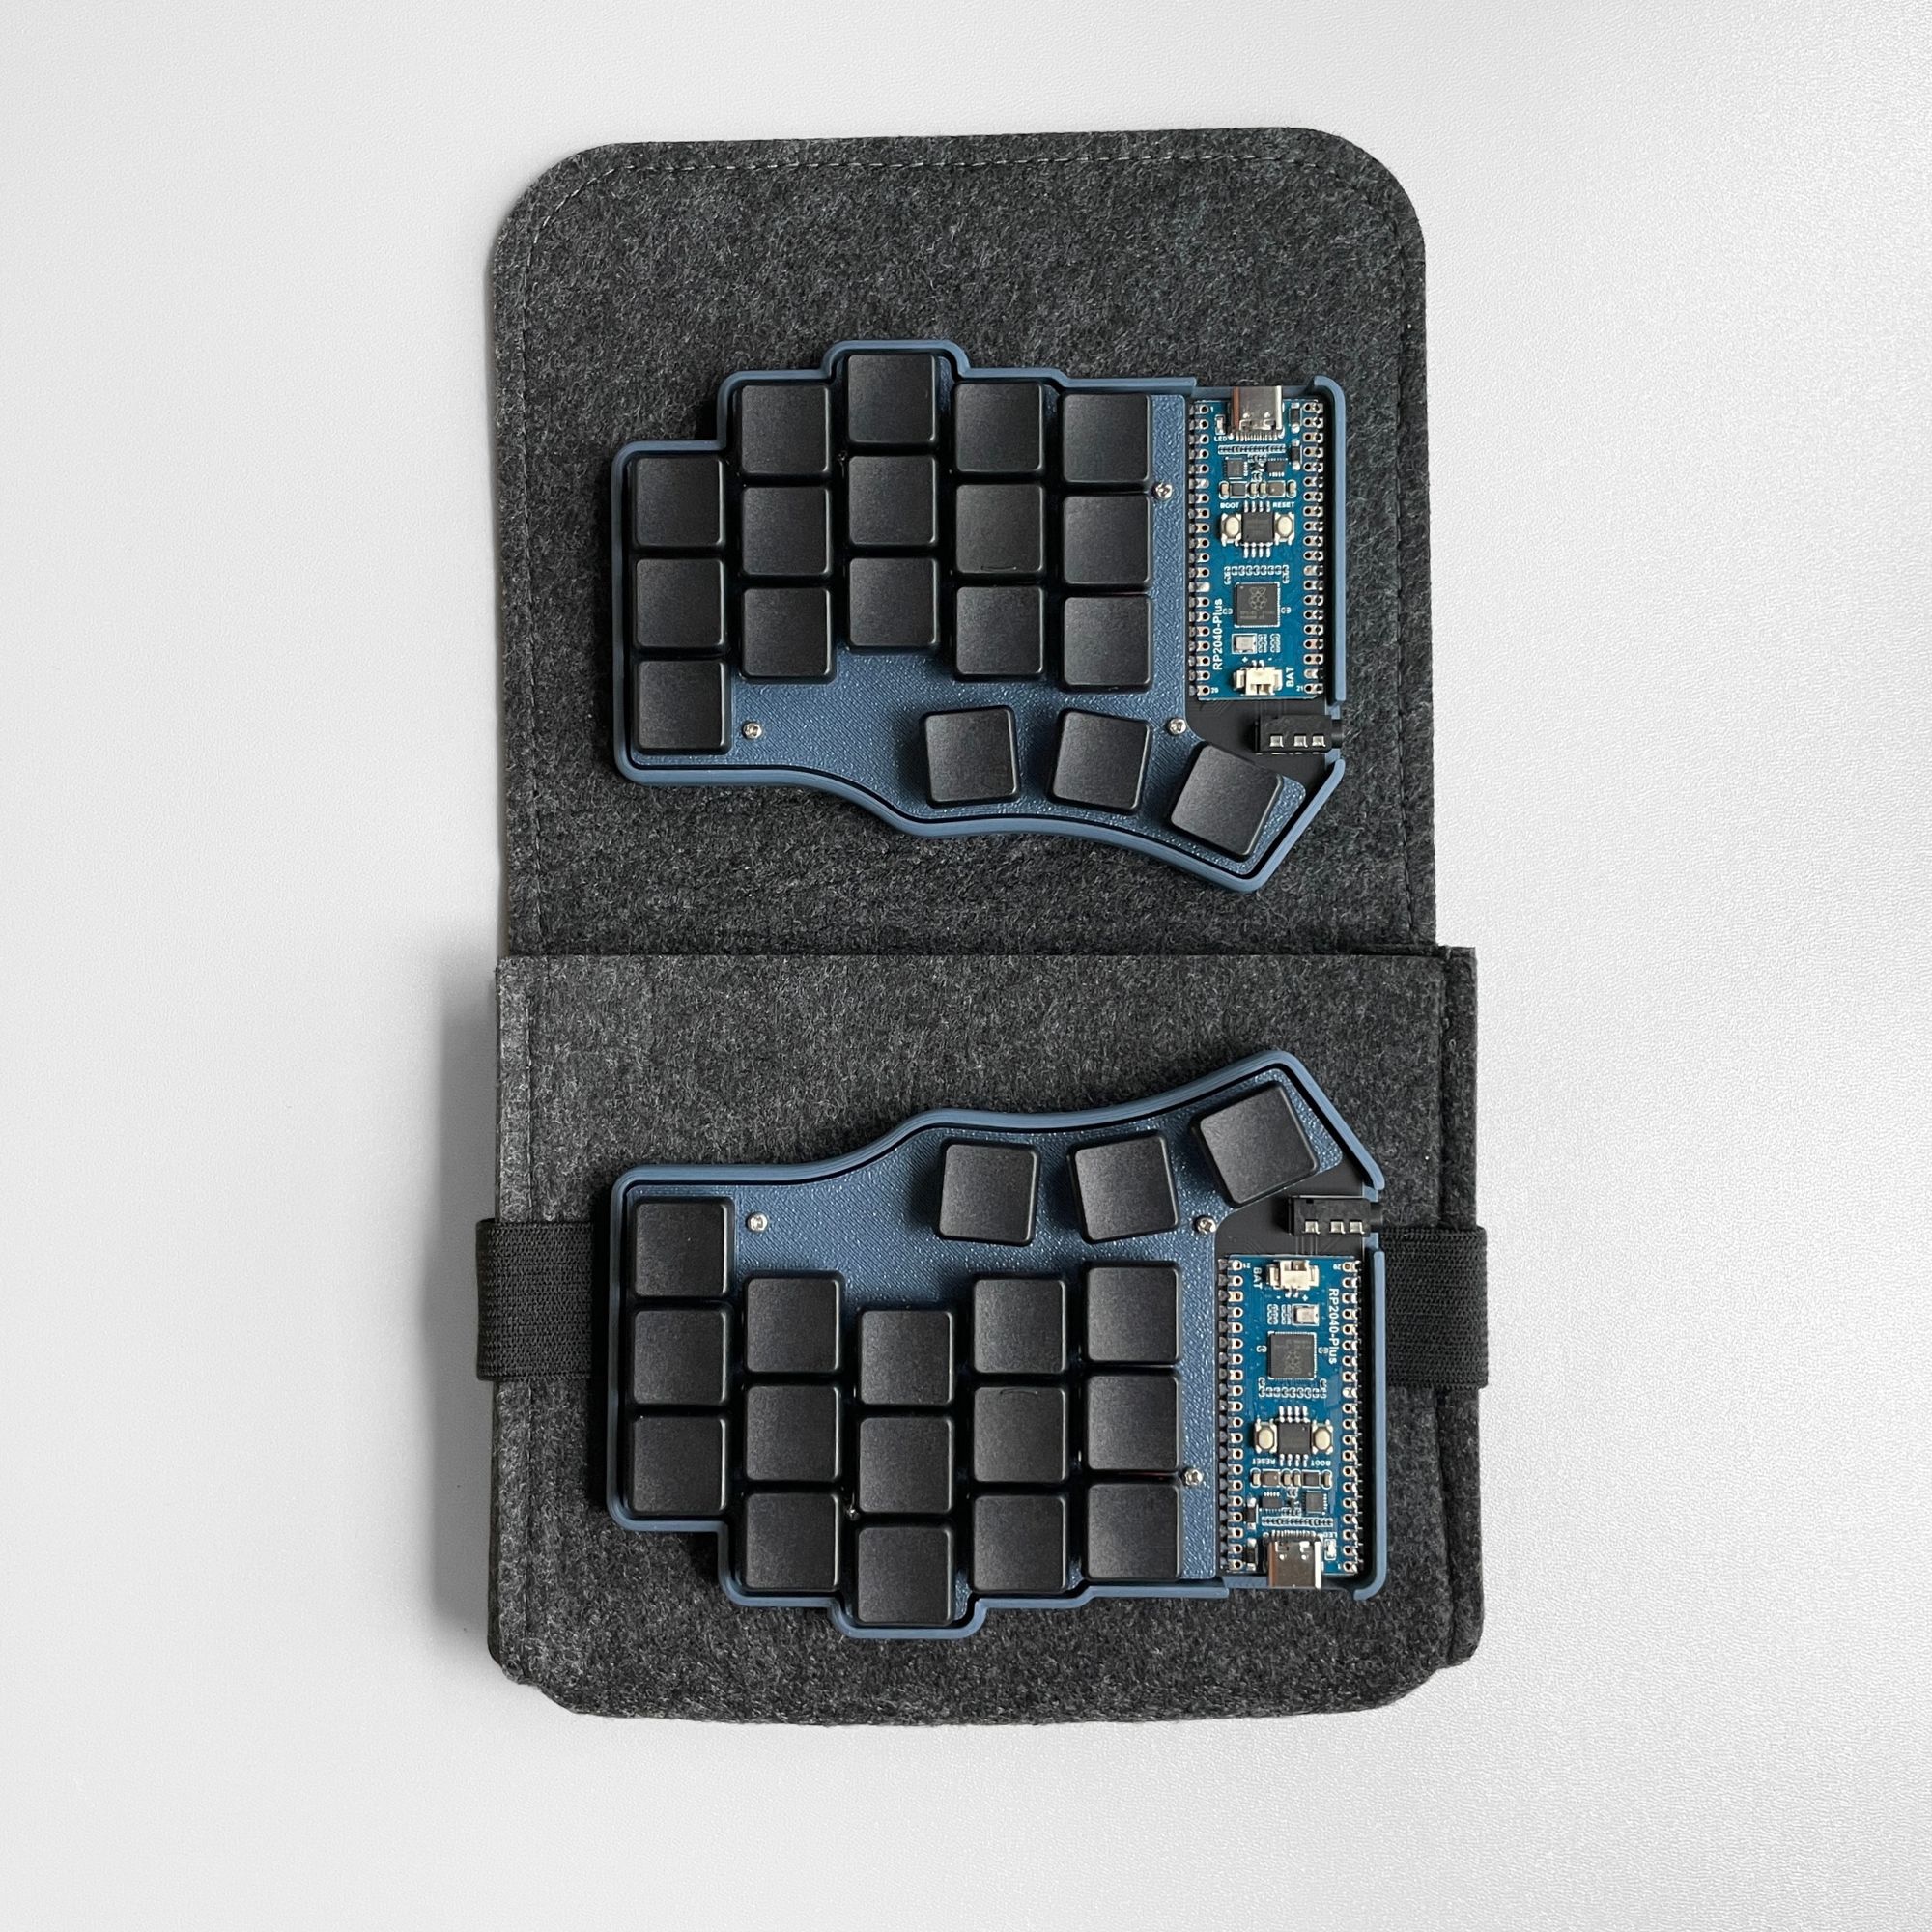 Soft Travel Bag for Split Keyboard